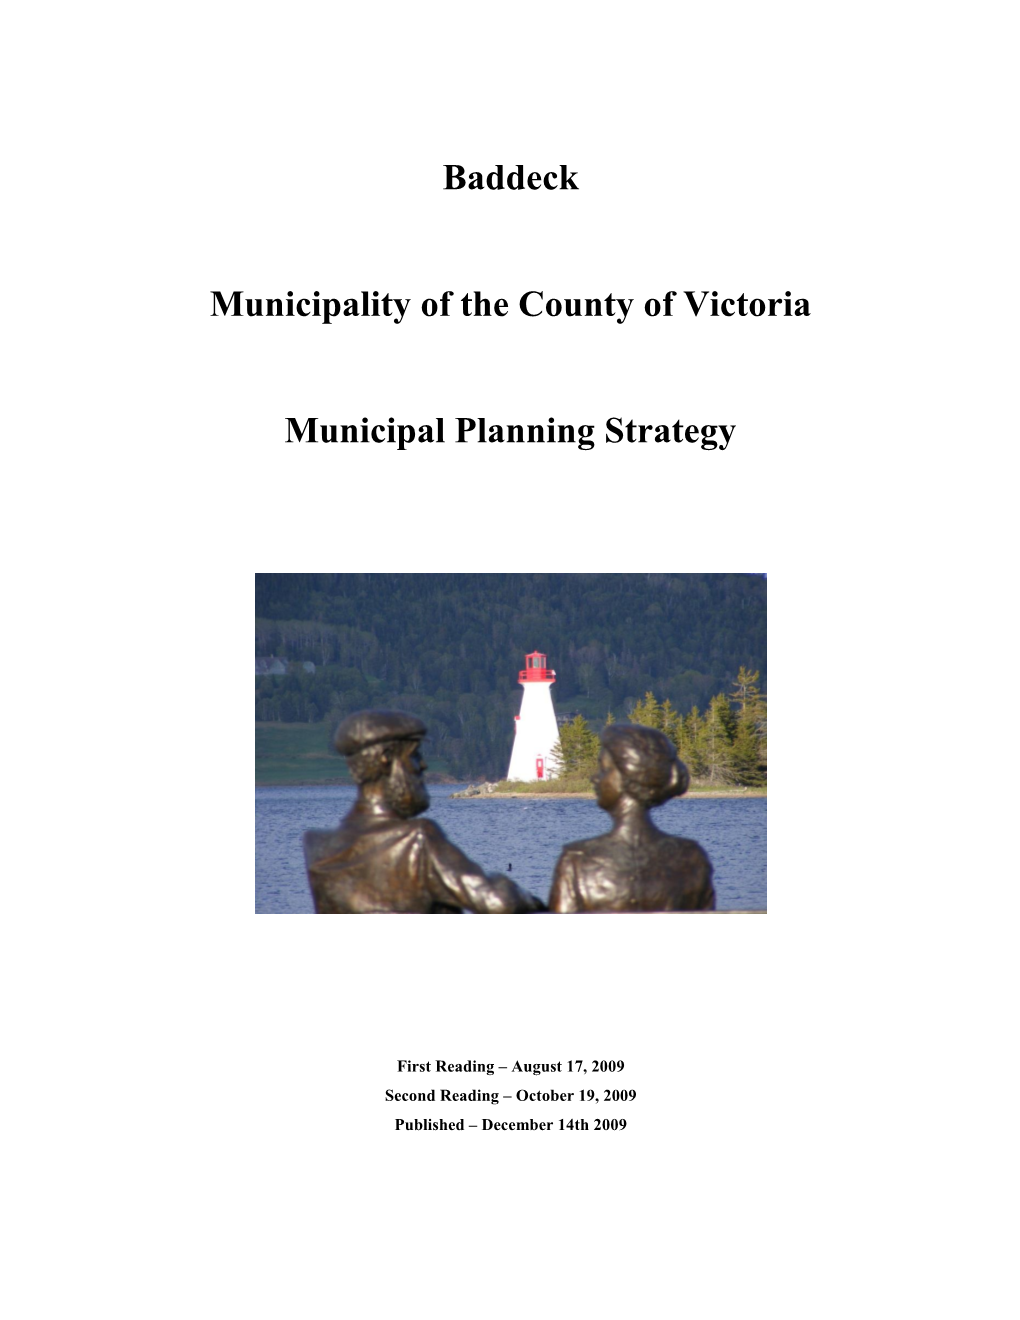 Baddeck Municipality of the County of Victoria Municipal Planning Strategy